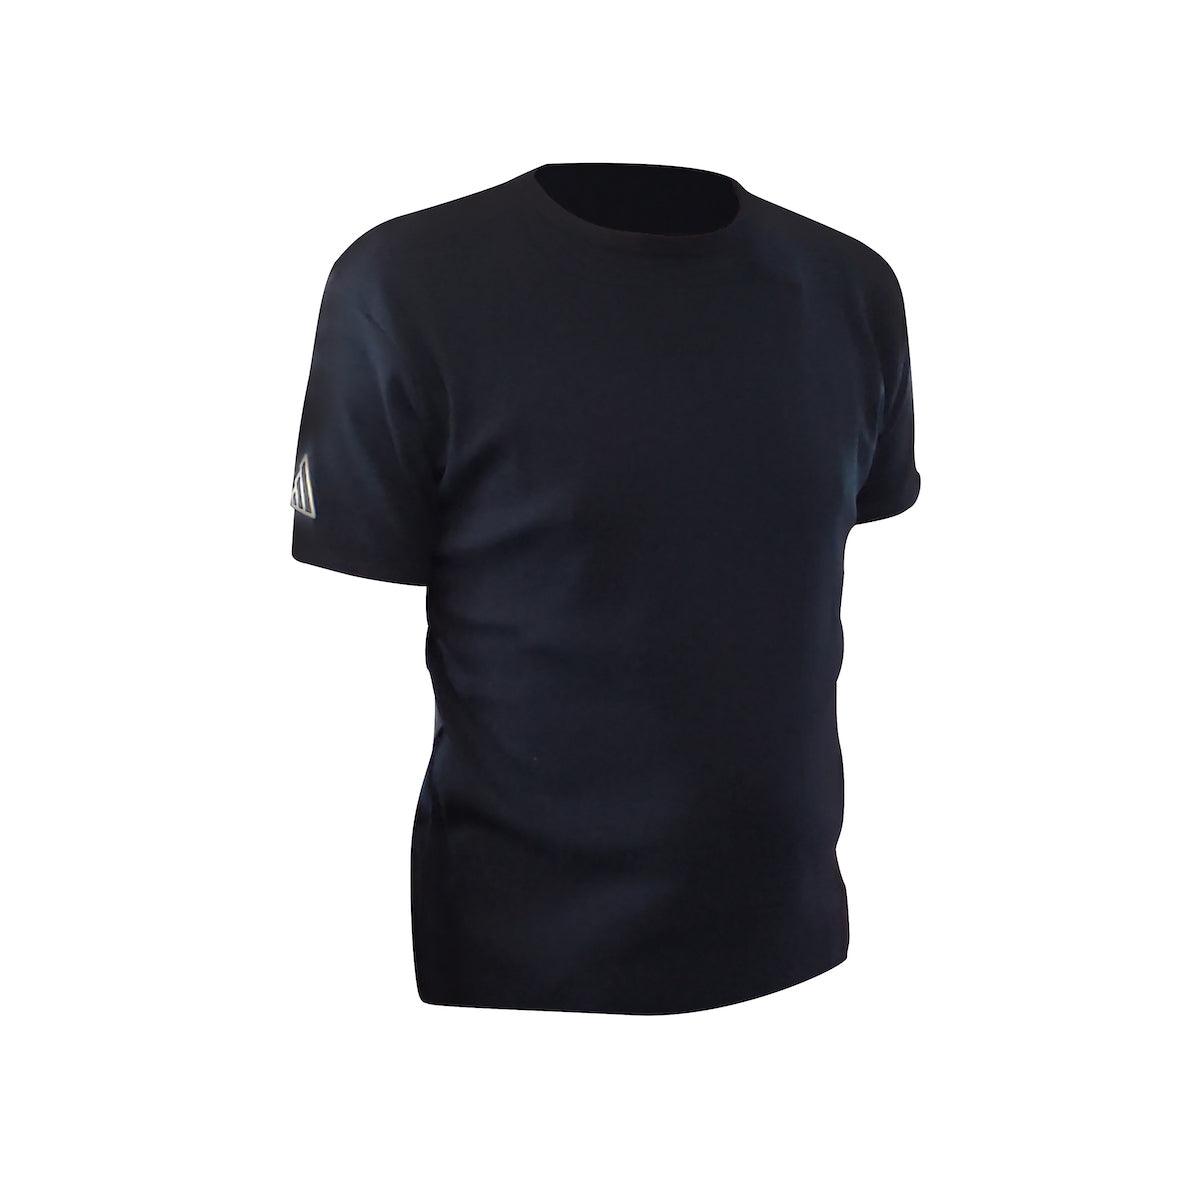 T-shirt Adidas Eco-responsable labellisé GOTS Made in France noir